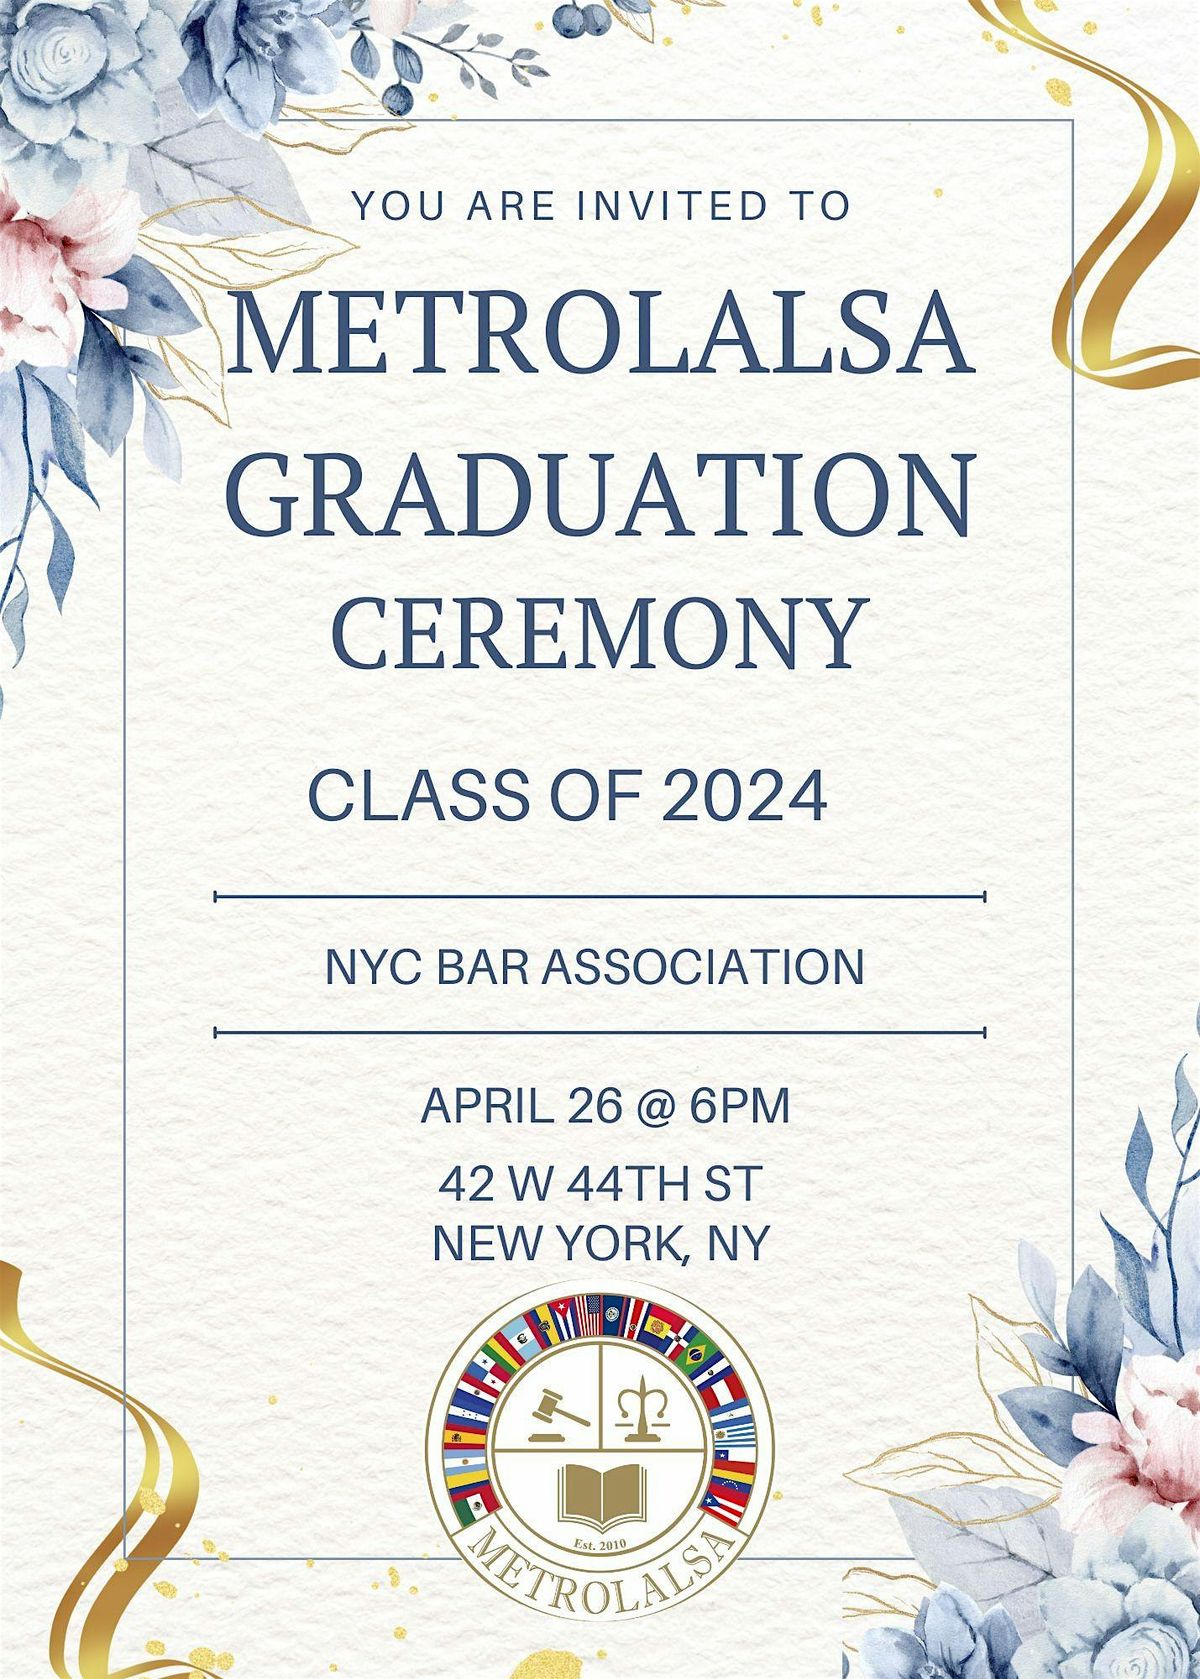 MetroLALSA 2024 Graduation Ceremony